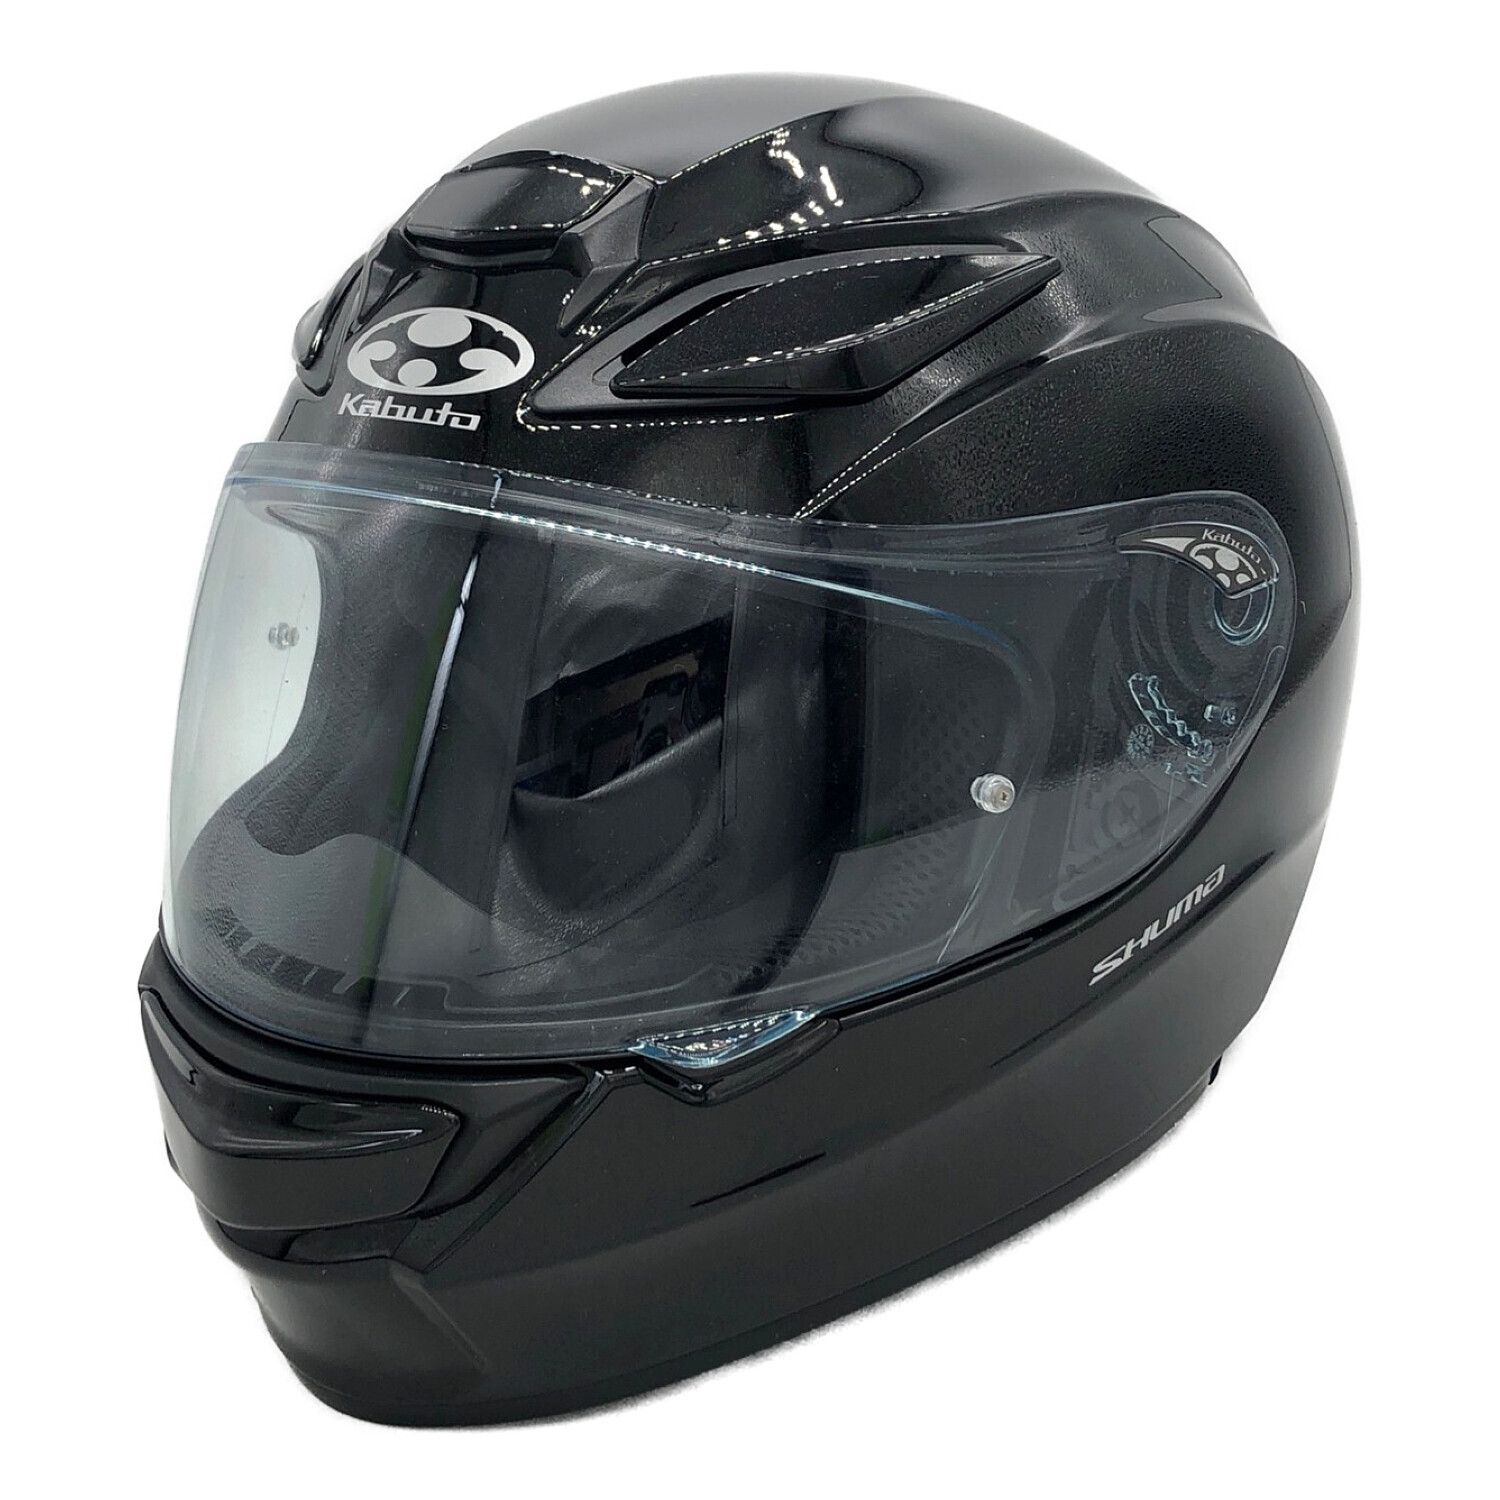 kabuto japan バイク用ヘルメット SIZE L T8133 2015年製 PSCマーク 